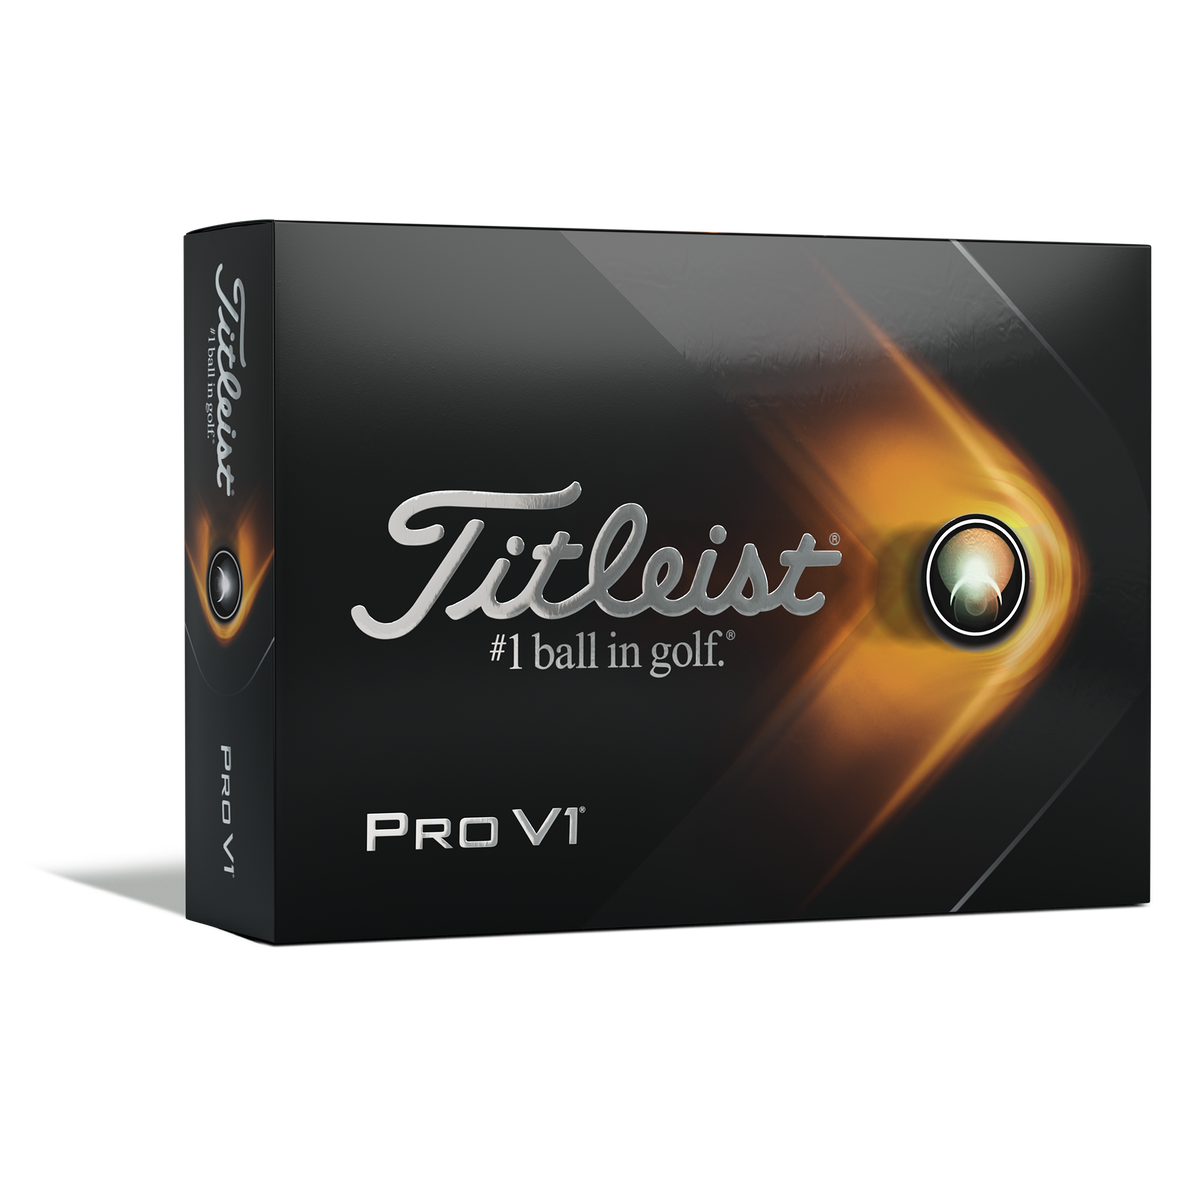 Titleist Pro V1 - Buy Titleist Pro V1 Golf Balls - Titleist